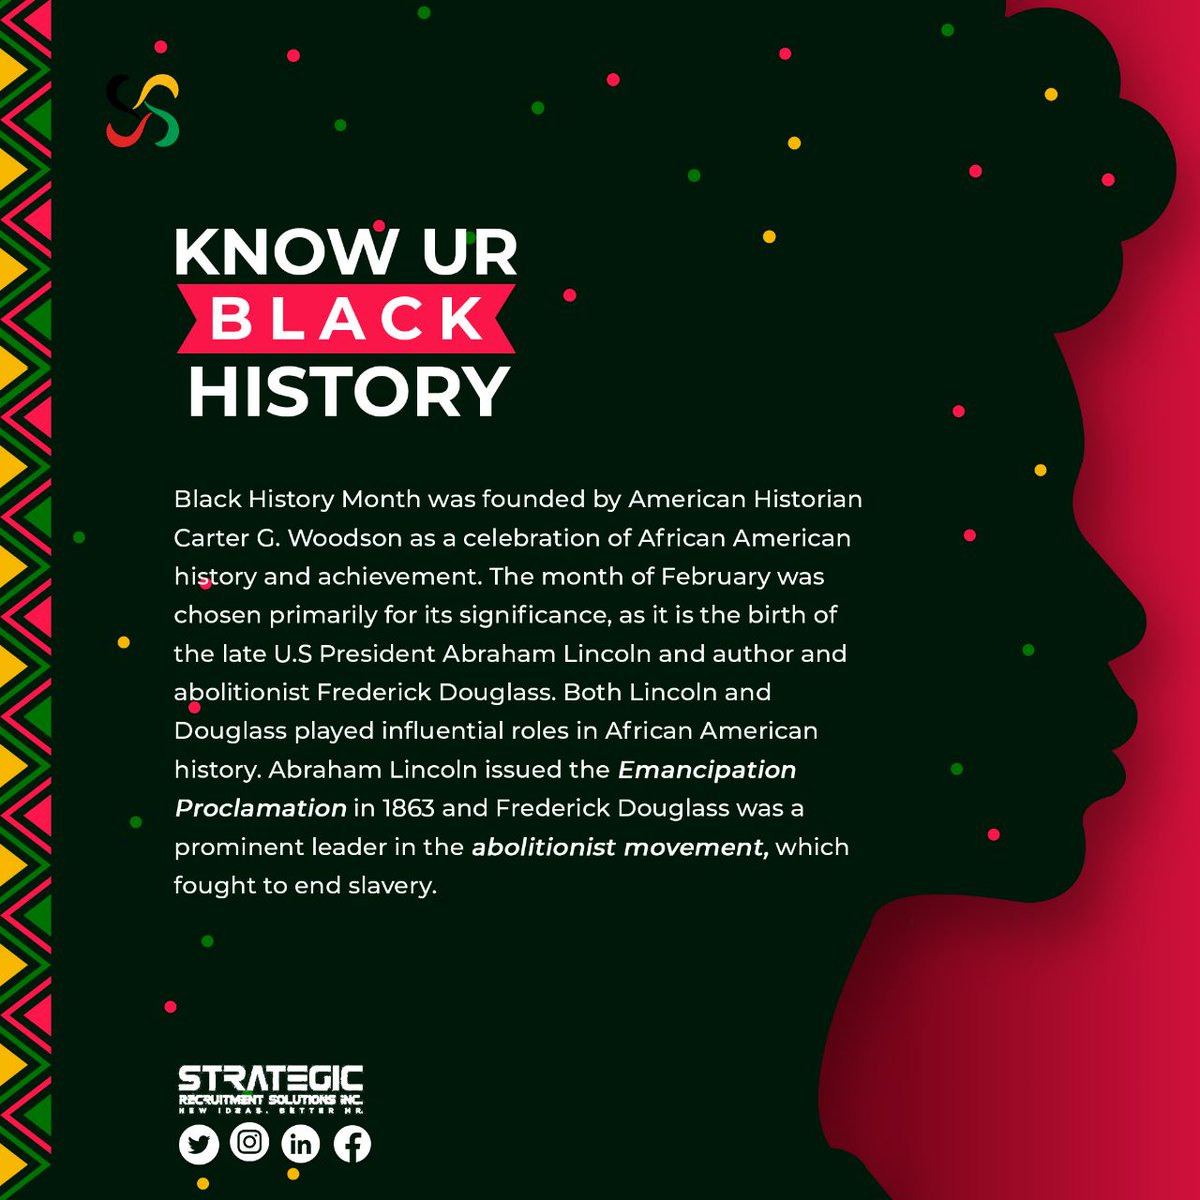 Know ur black history! BHM was founded by American Historian Carter G. Woodson. 

#srsgy #hrcompany #Guyana #recruitment #safetyfirst #BlackHistoryMonth #blackexcelence #blacklove #blackownedbusiness #blackhistory #blackgirlmagic #melanin #knowyourhistory #caribbeanhistory